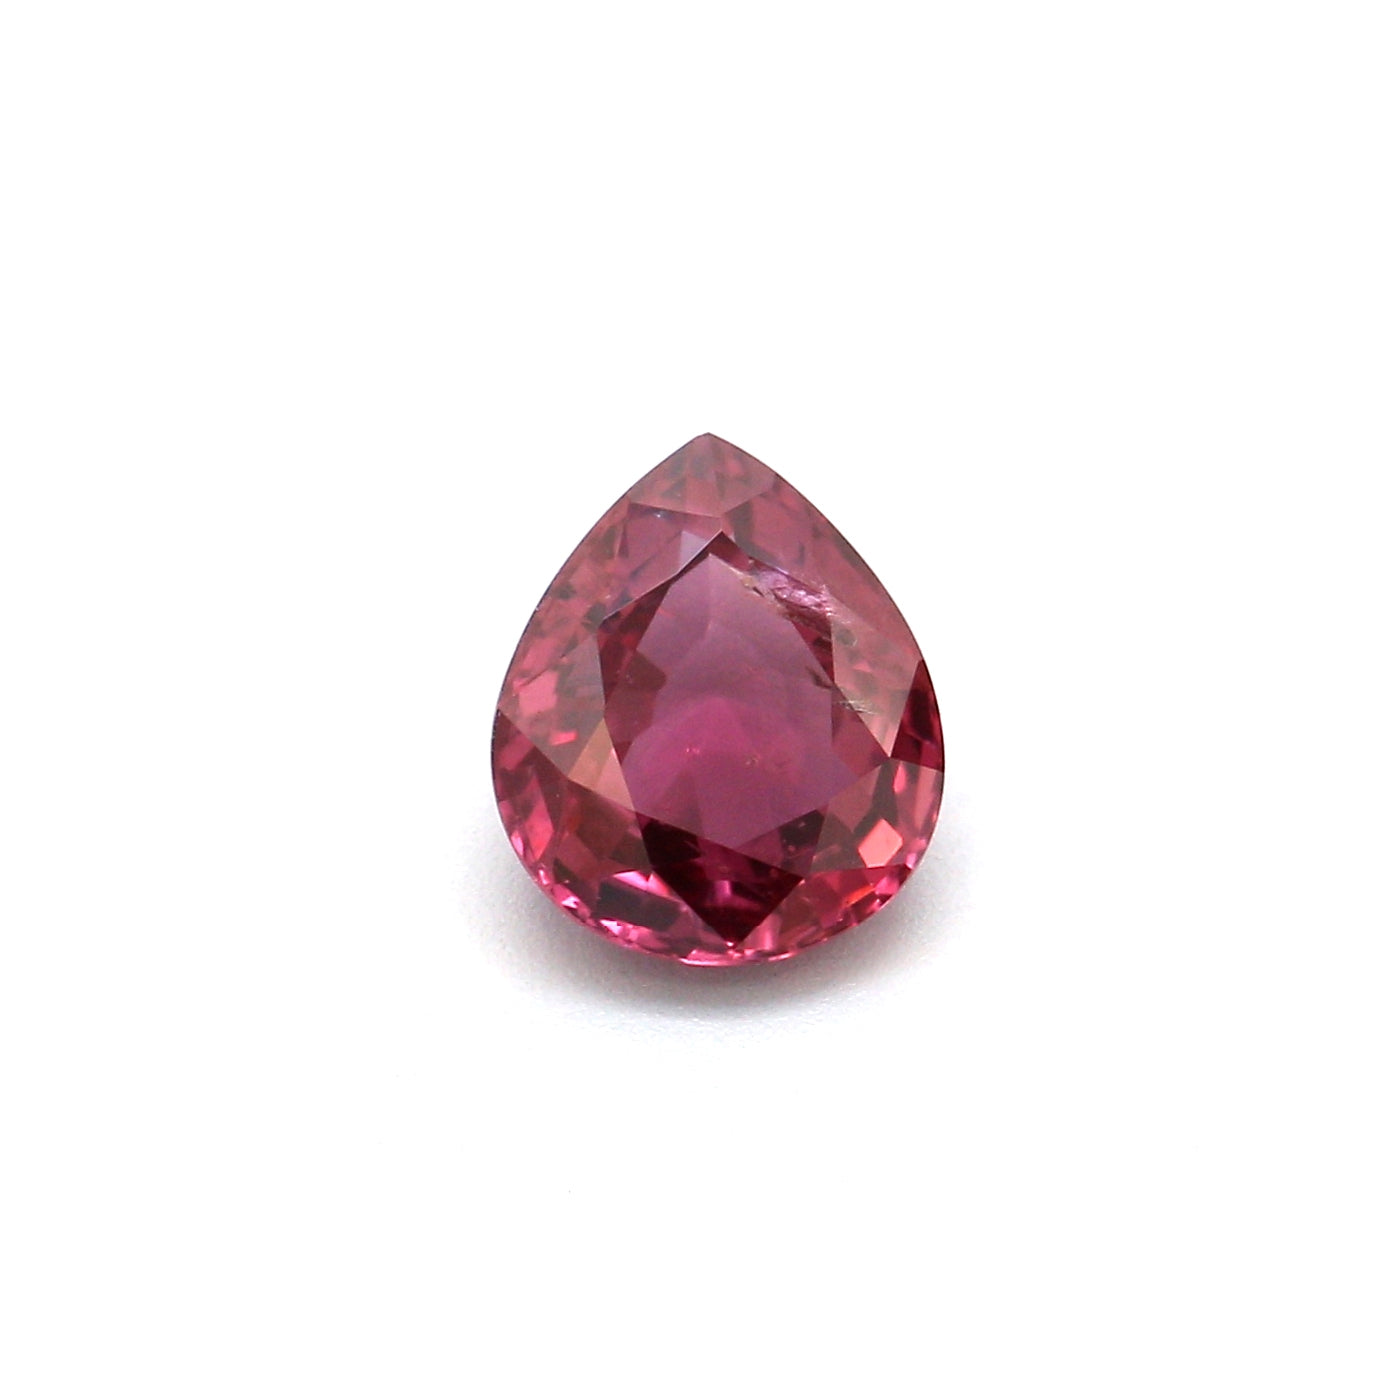 0.68ct Purplish Red, Pear Shape Ruby, Heated, Thailand - 6.02 x 5.00 x 2.77mm